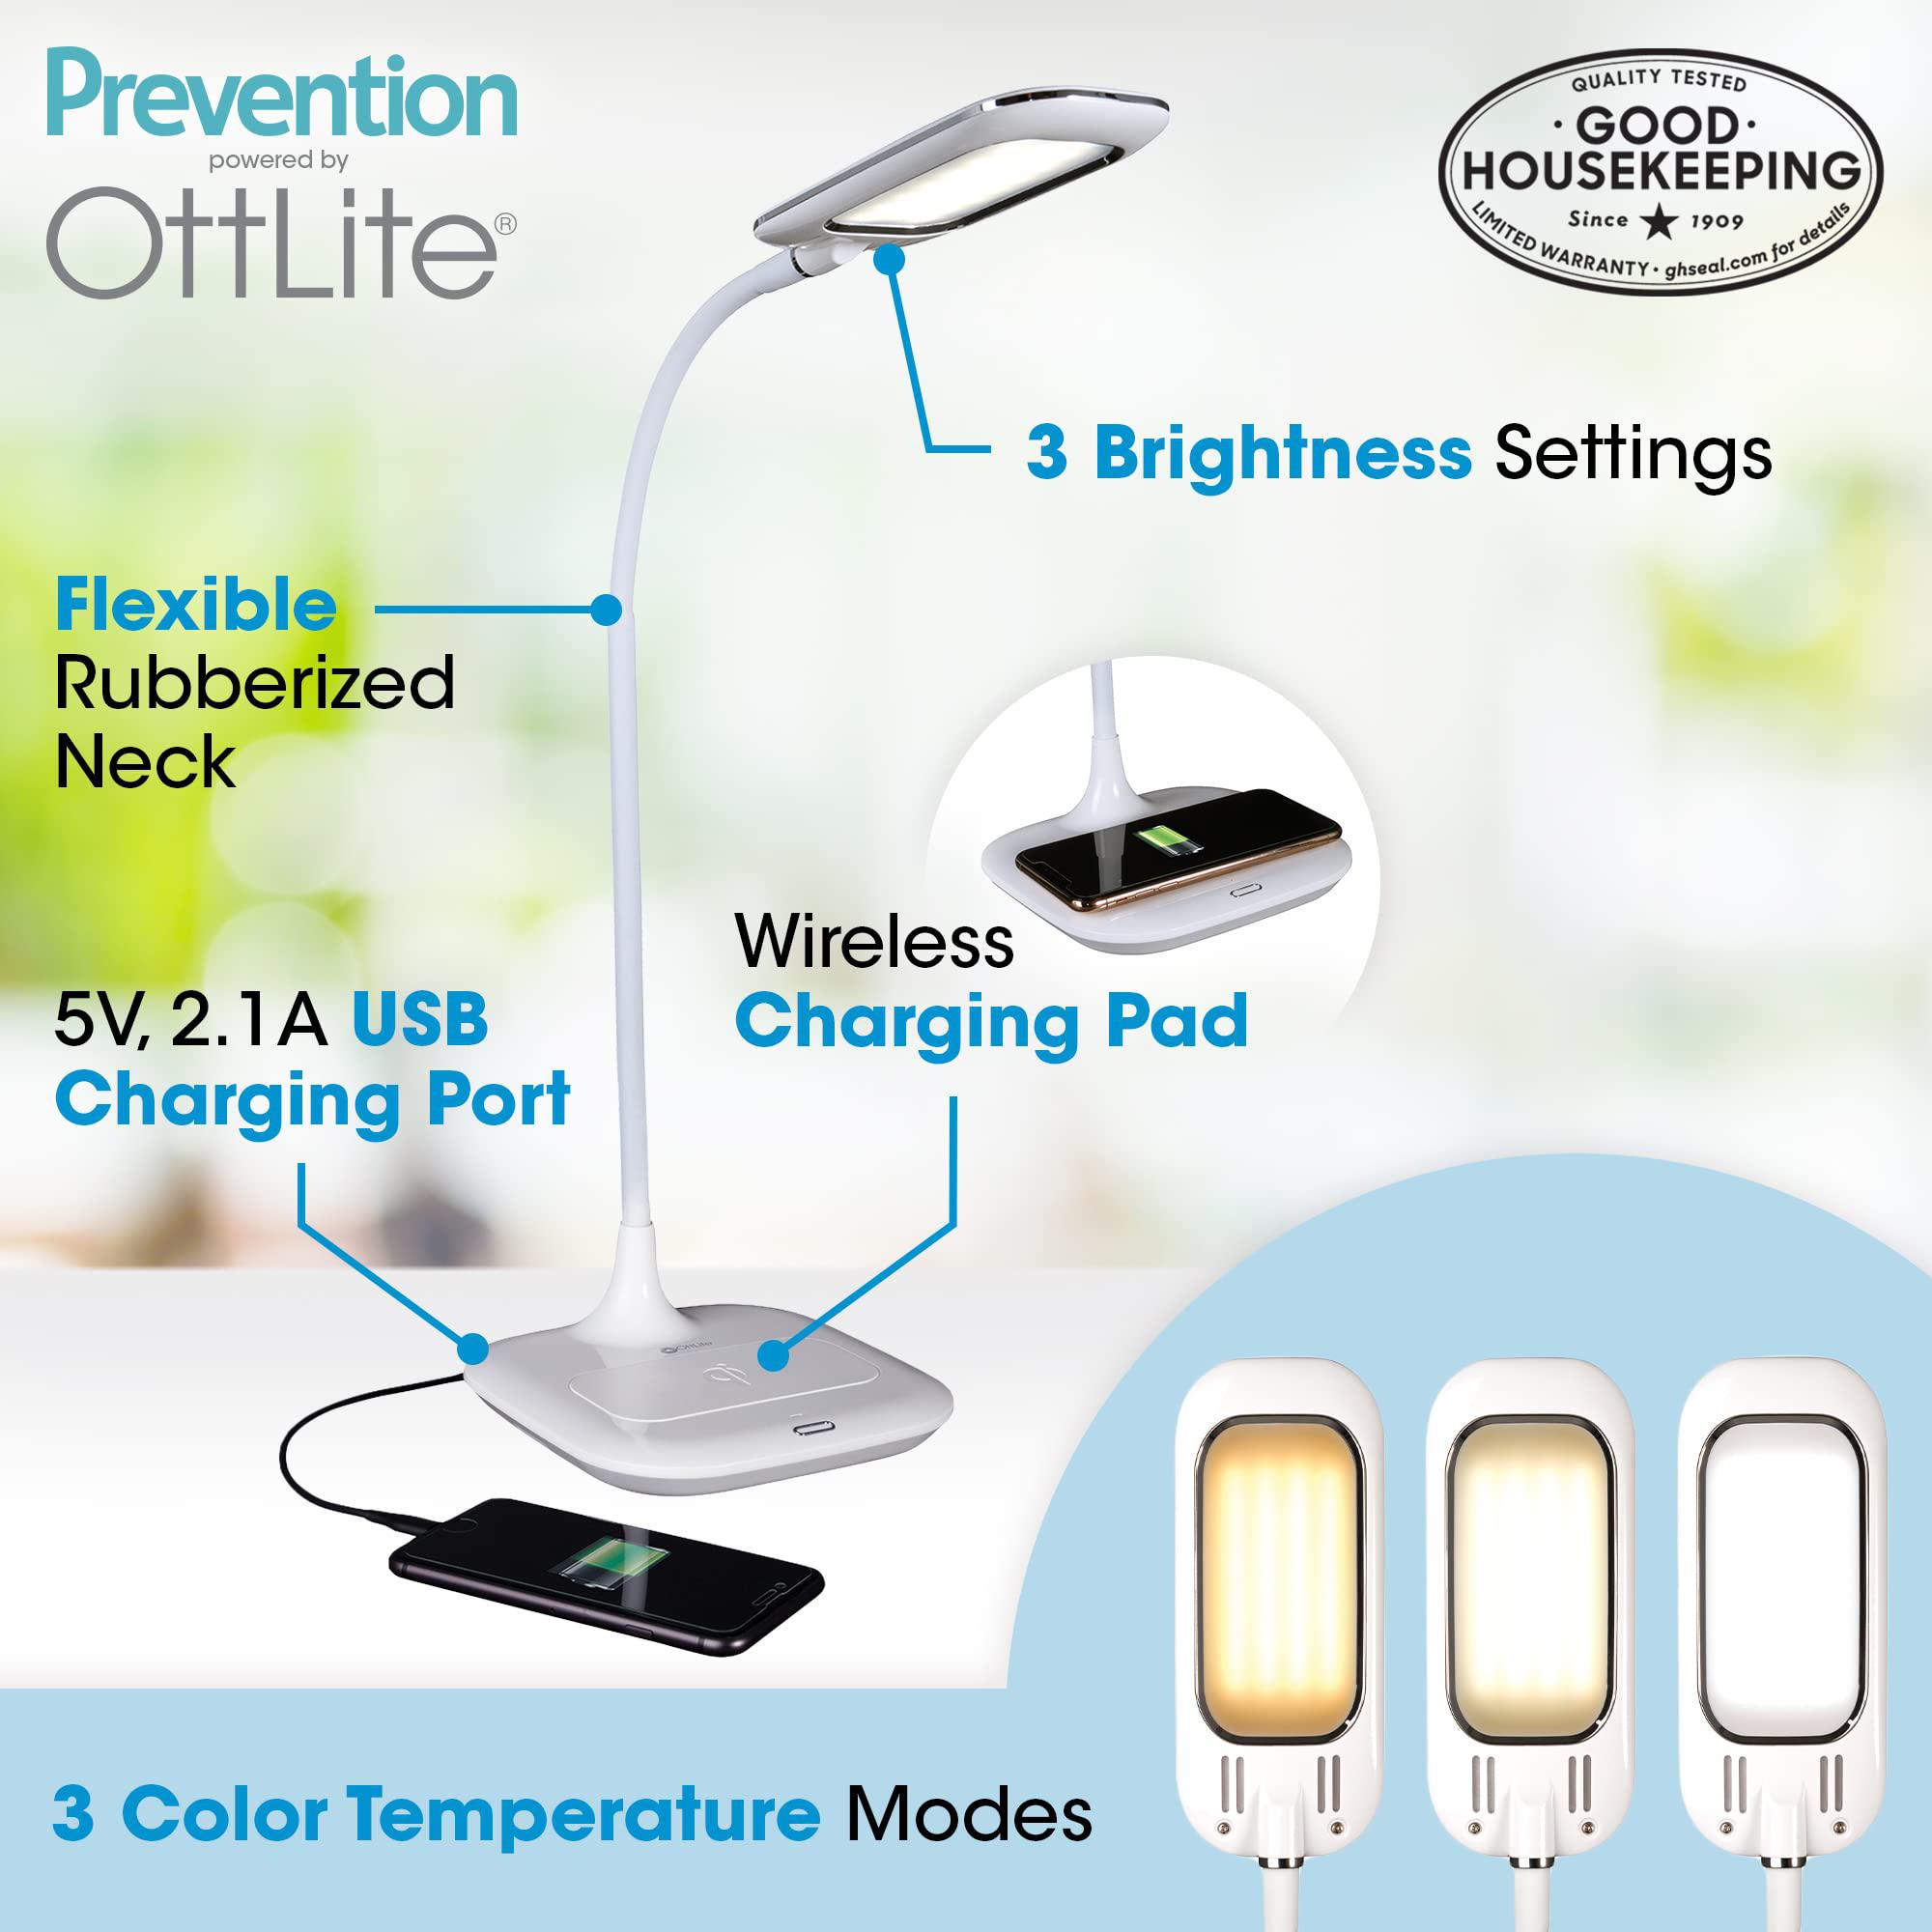 ottlite led desk lamp with wireless charging, prevention designed to reduce eyestrain - adjustable flexible neck, 3 color mod